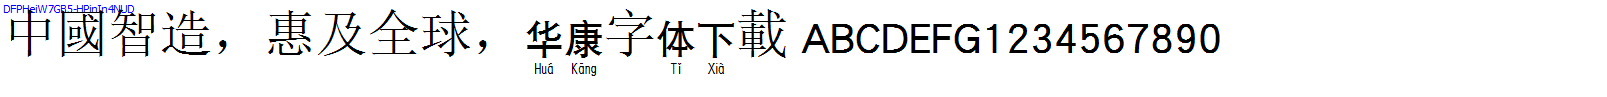 華康字體DFPHeiW7GB5-HPinIn4NUD.TTF